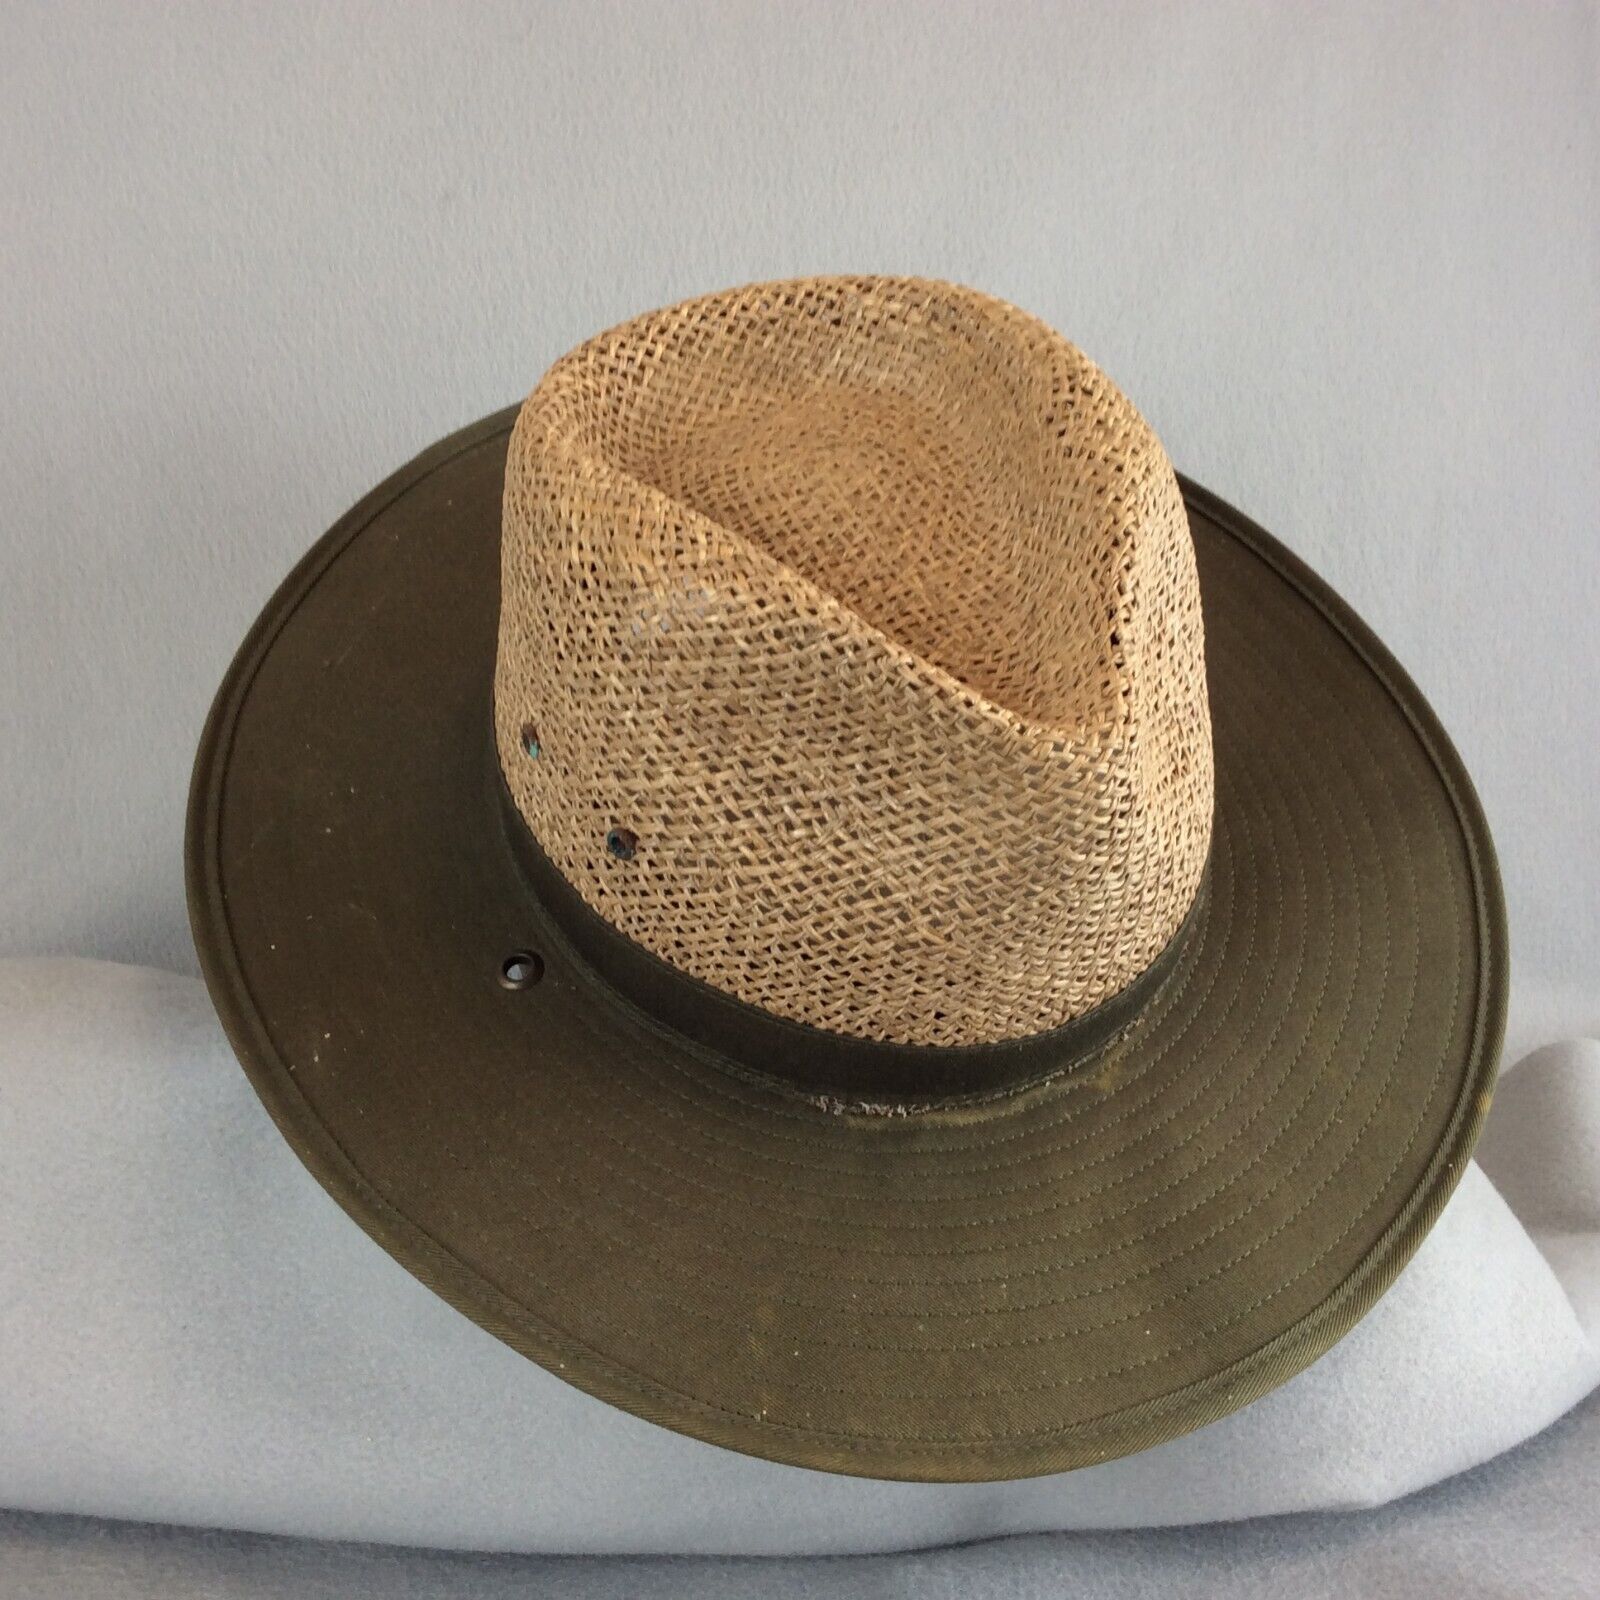 Stetson Hat 22.5" Basket Woven Straw Safari Green Canvas Brim Outdoor Fishing